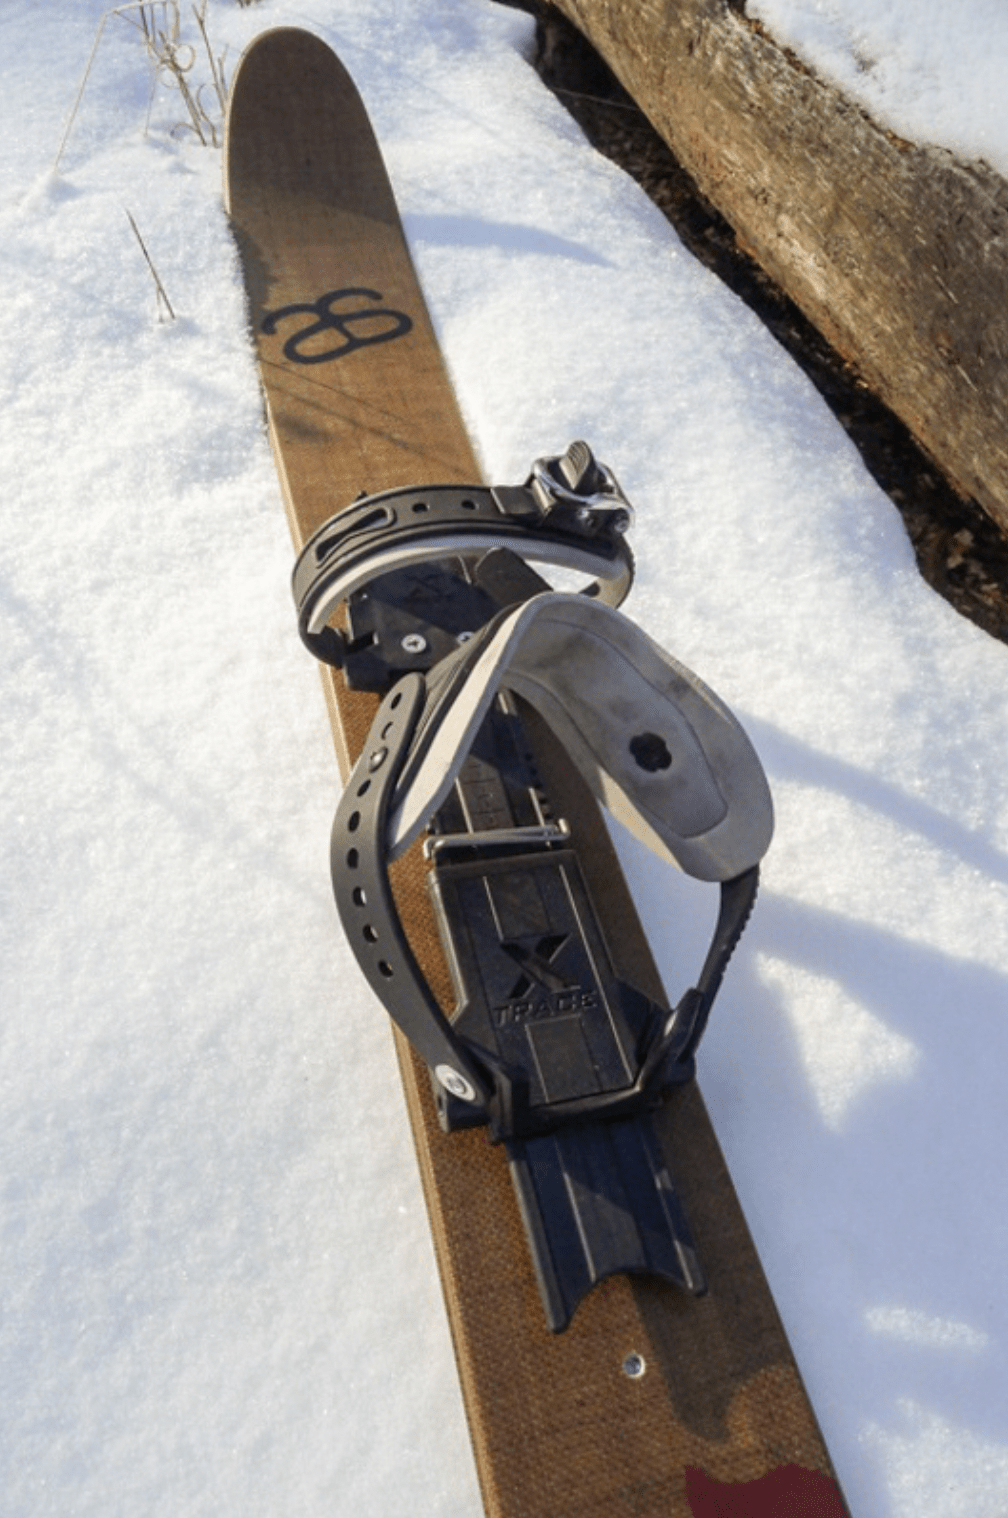 Hok Ski 145cm With Binding – Tracks Fresh Universal Pivot Outdoors